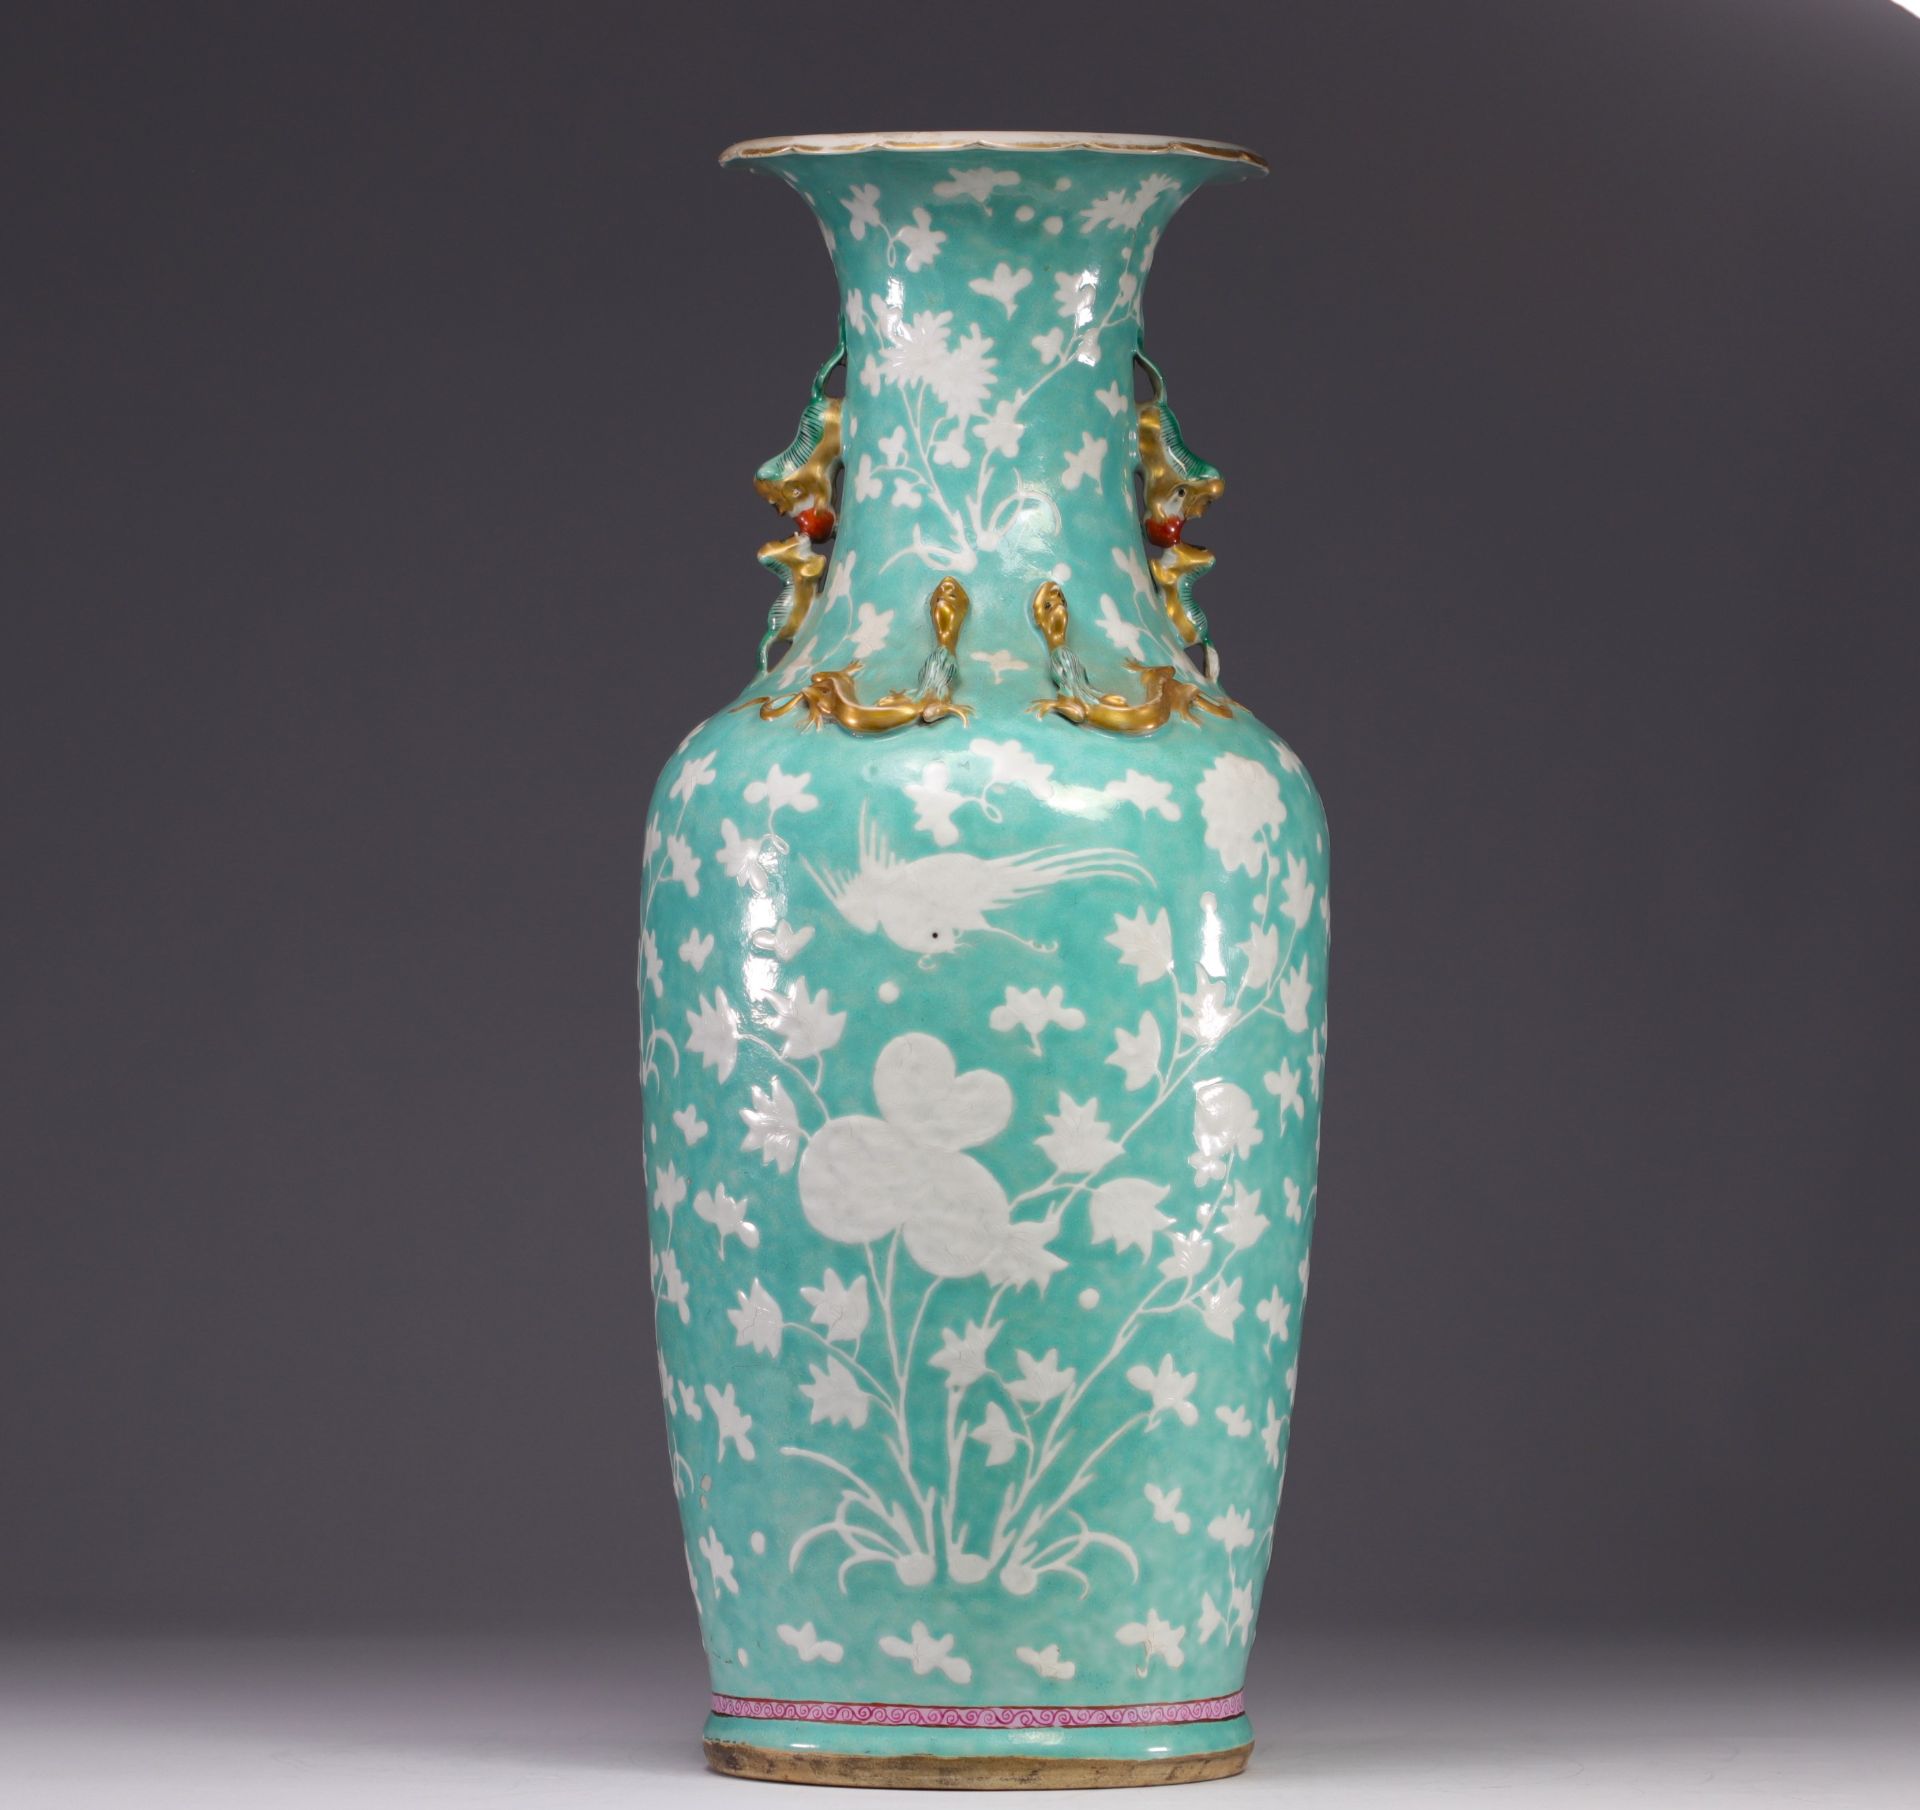 China - large porcelain vase decorated with flowers and birds, turquoise glaze, 19th century. - Image 4 of 6